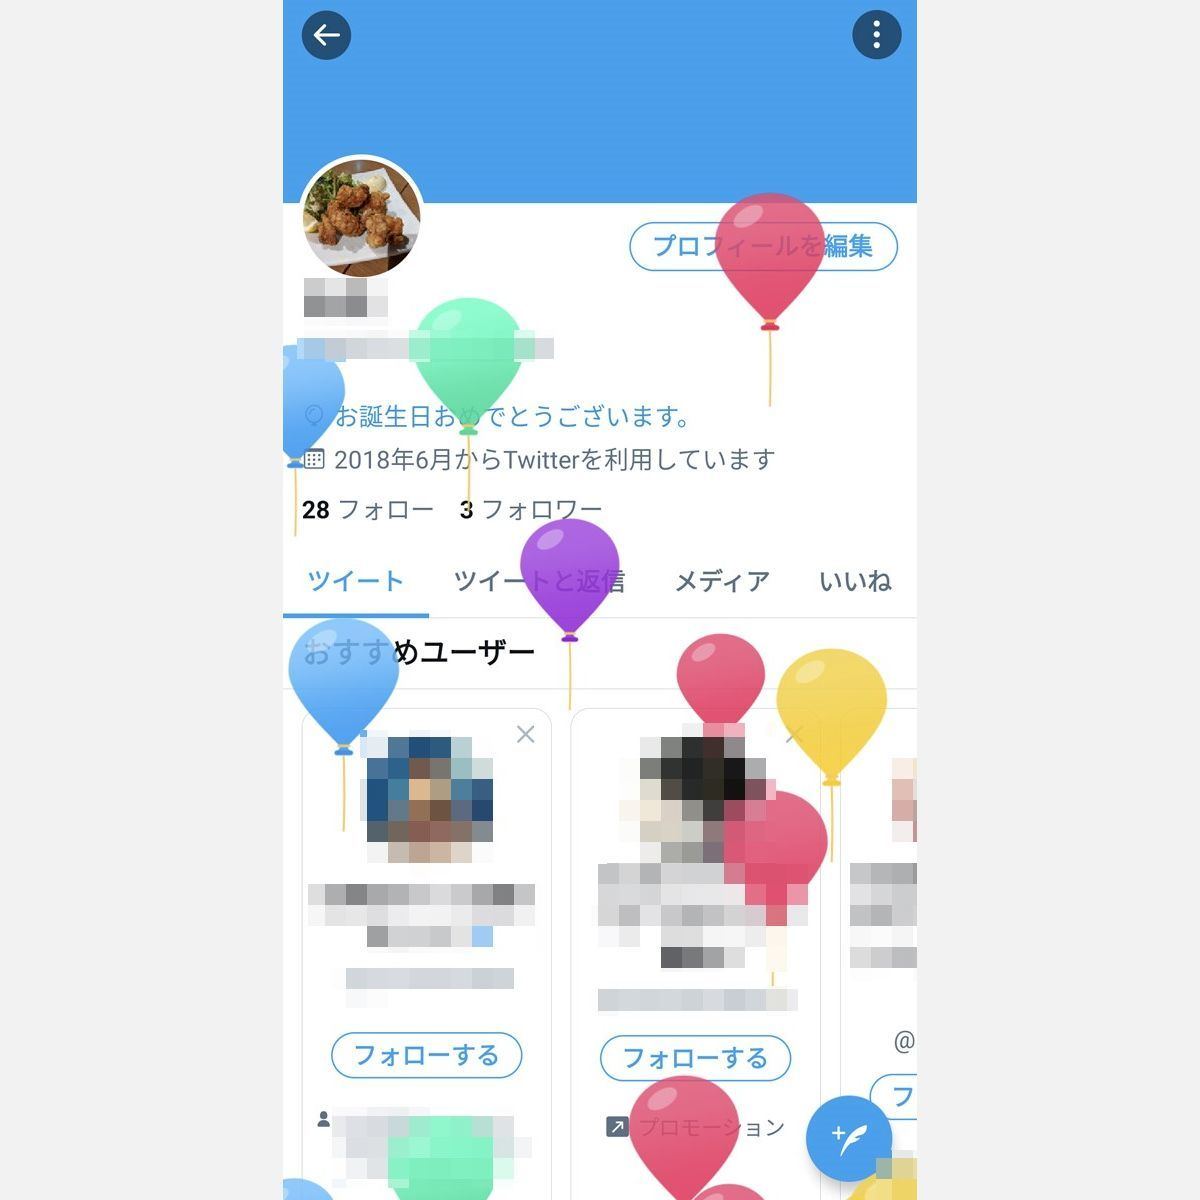 Twitterで誕生日を設定する 非公開にする方法 生年月日の公開範囲も 1 マイナビニュース